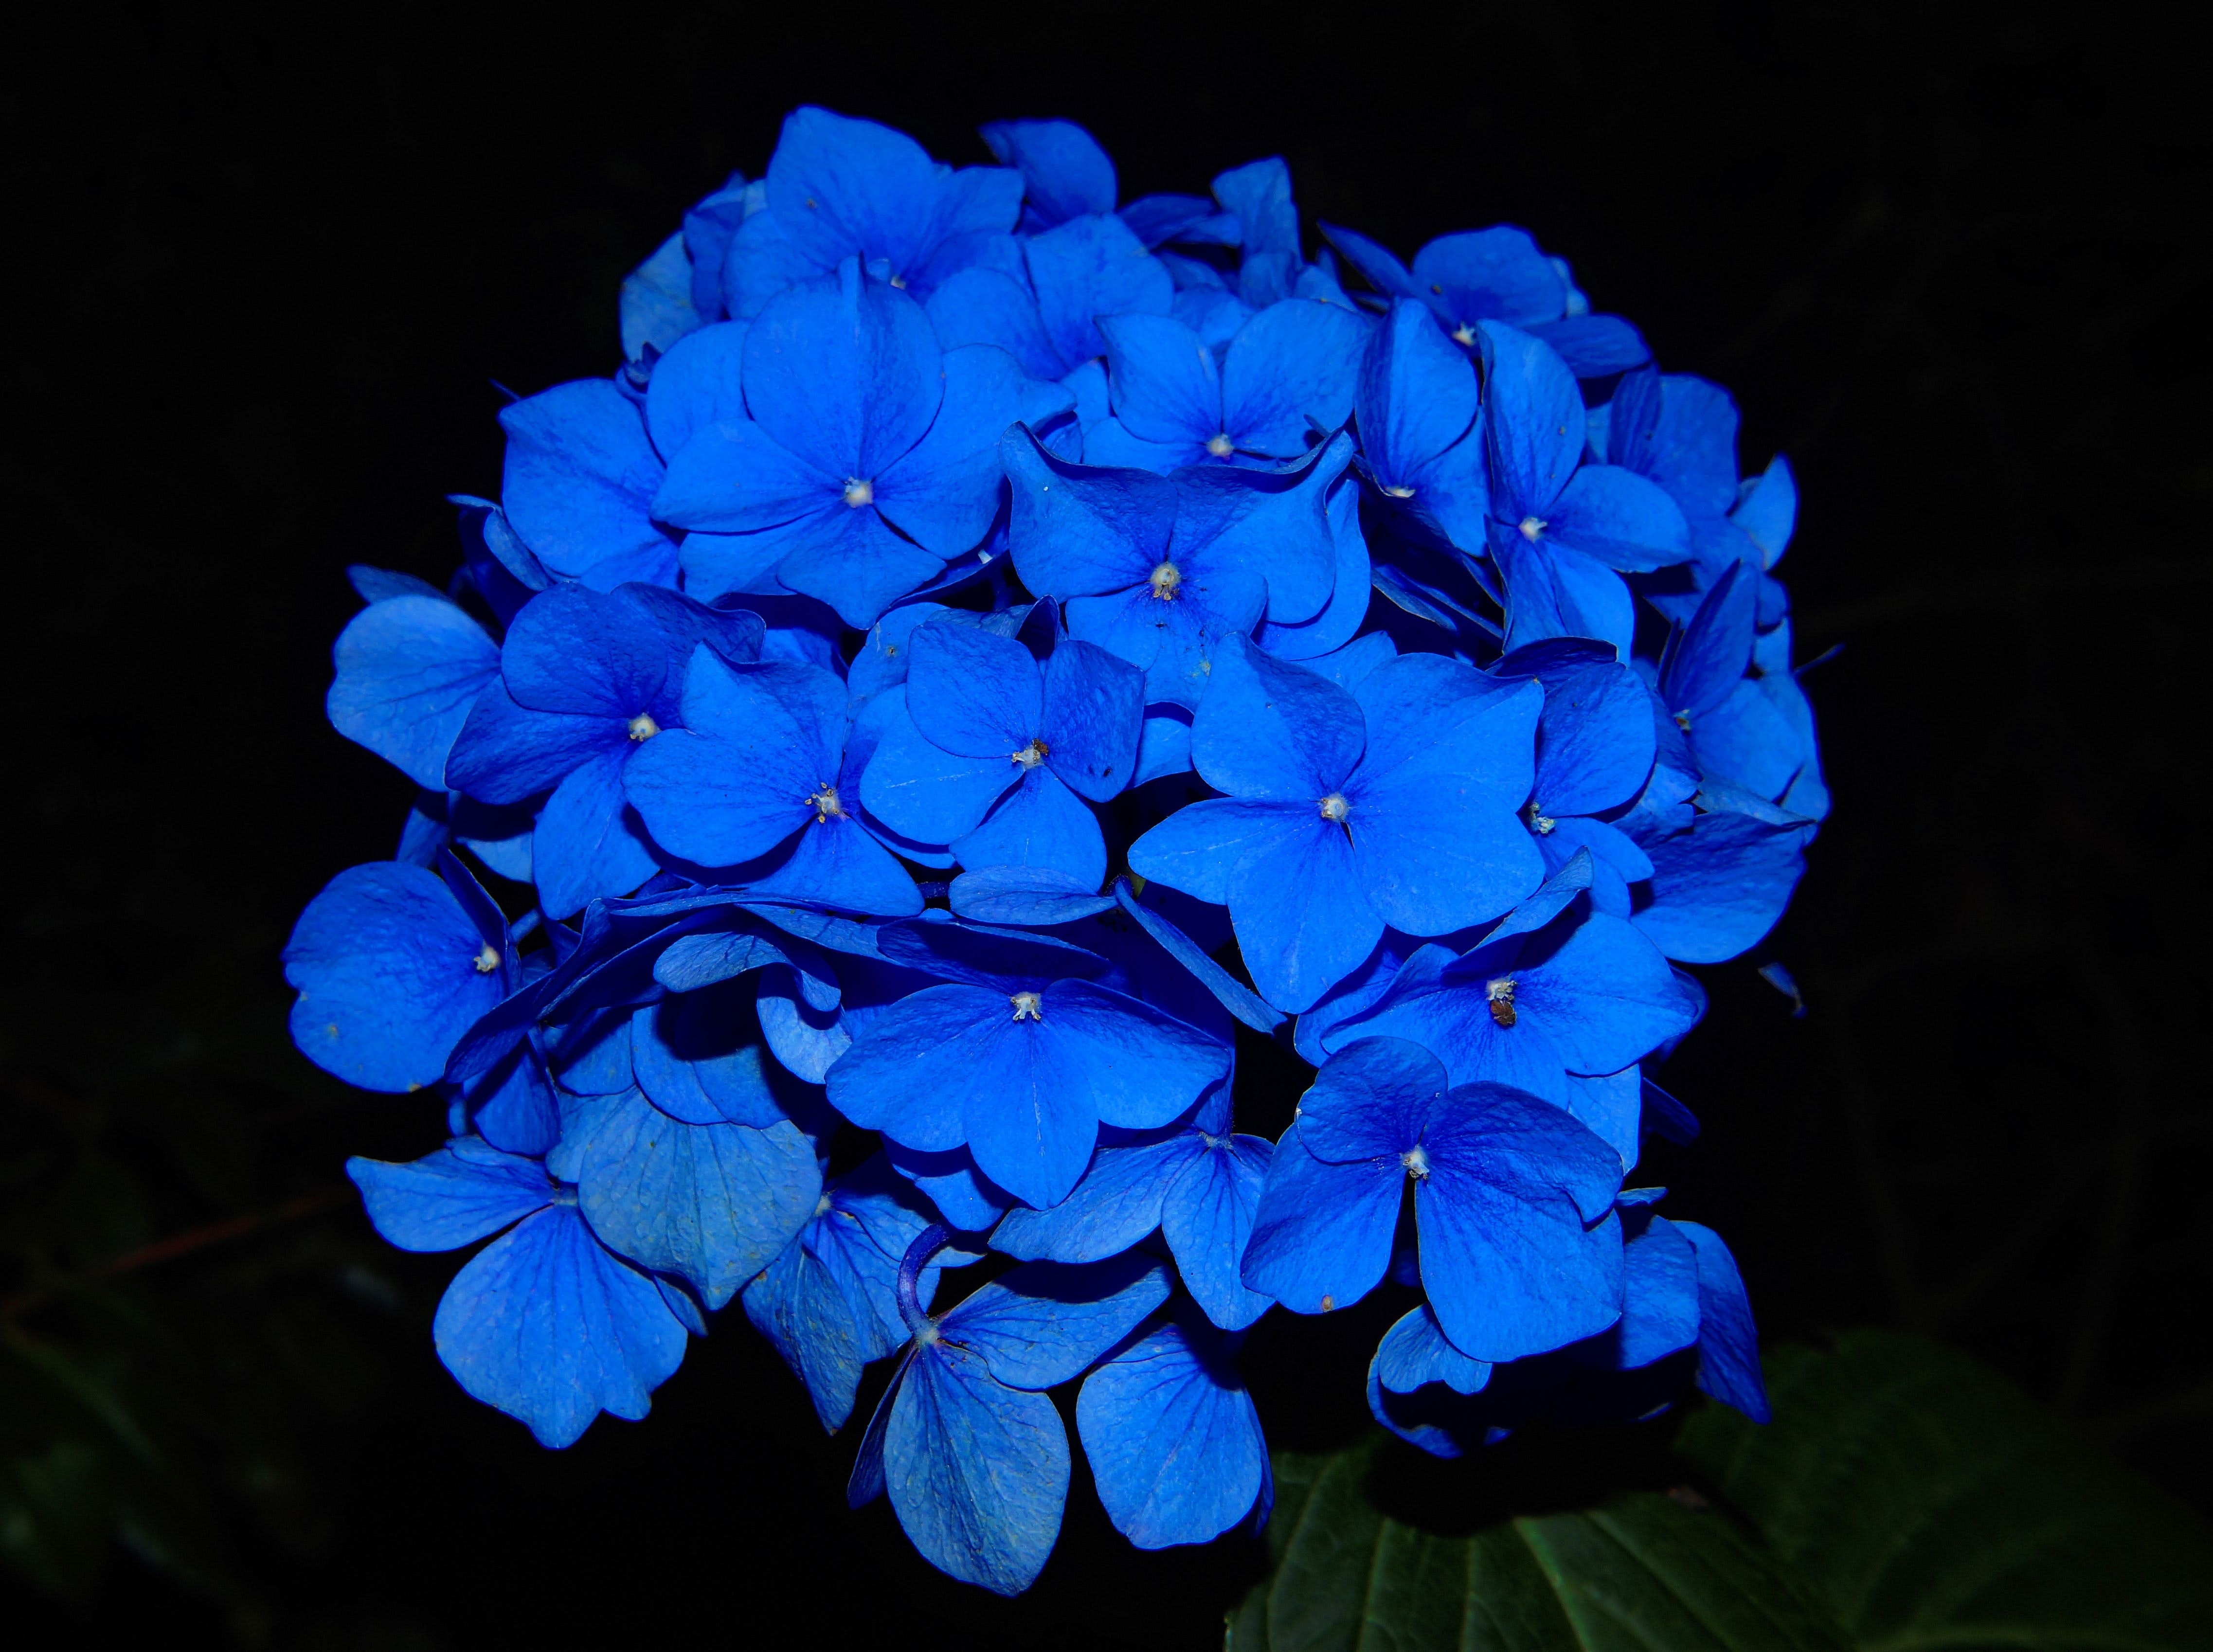 1000+ Great Blue Flowers Photos · Pexels · Free Stock Photos